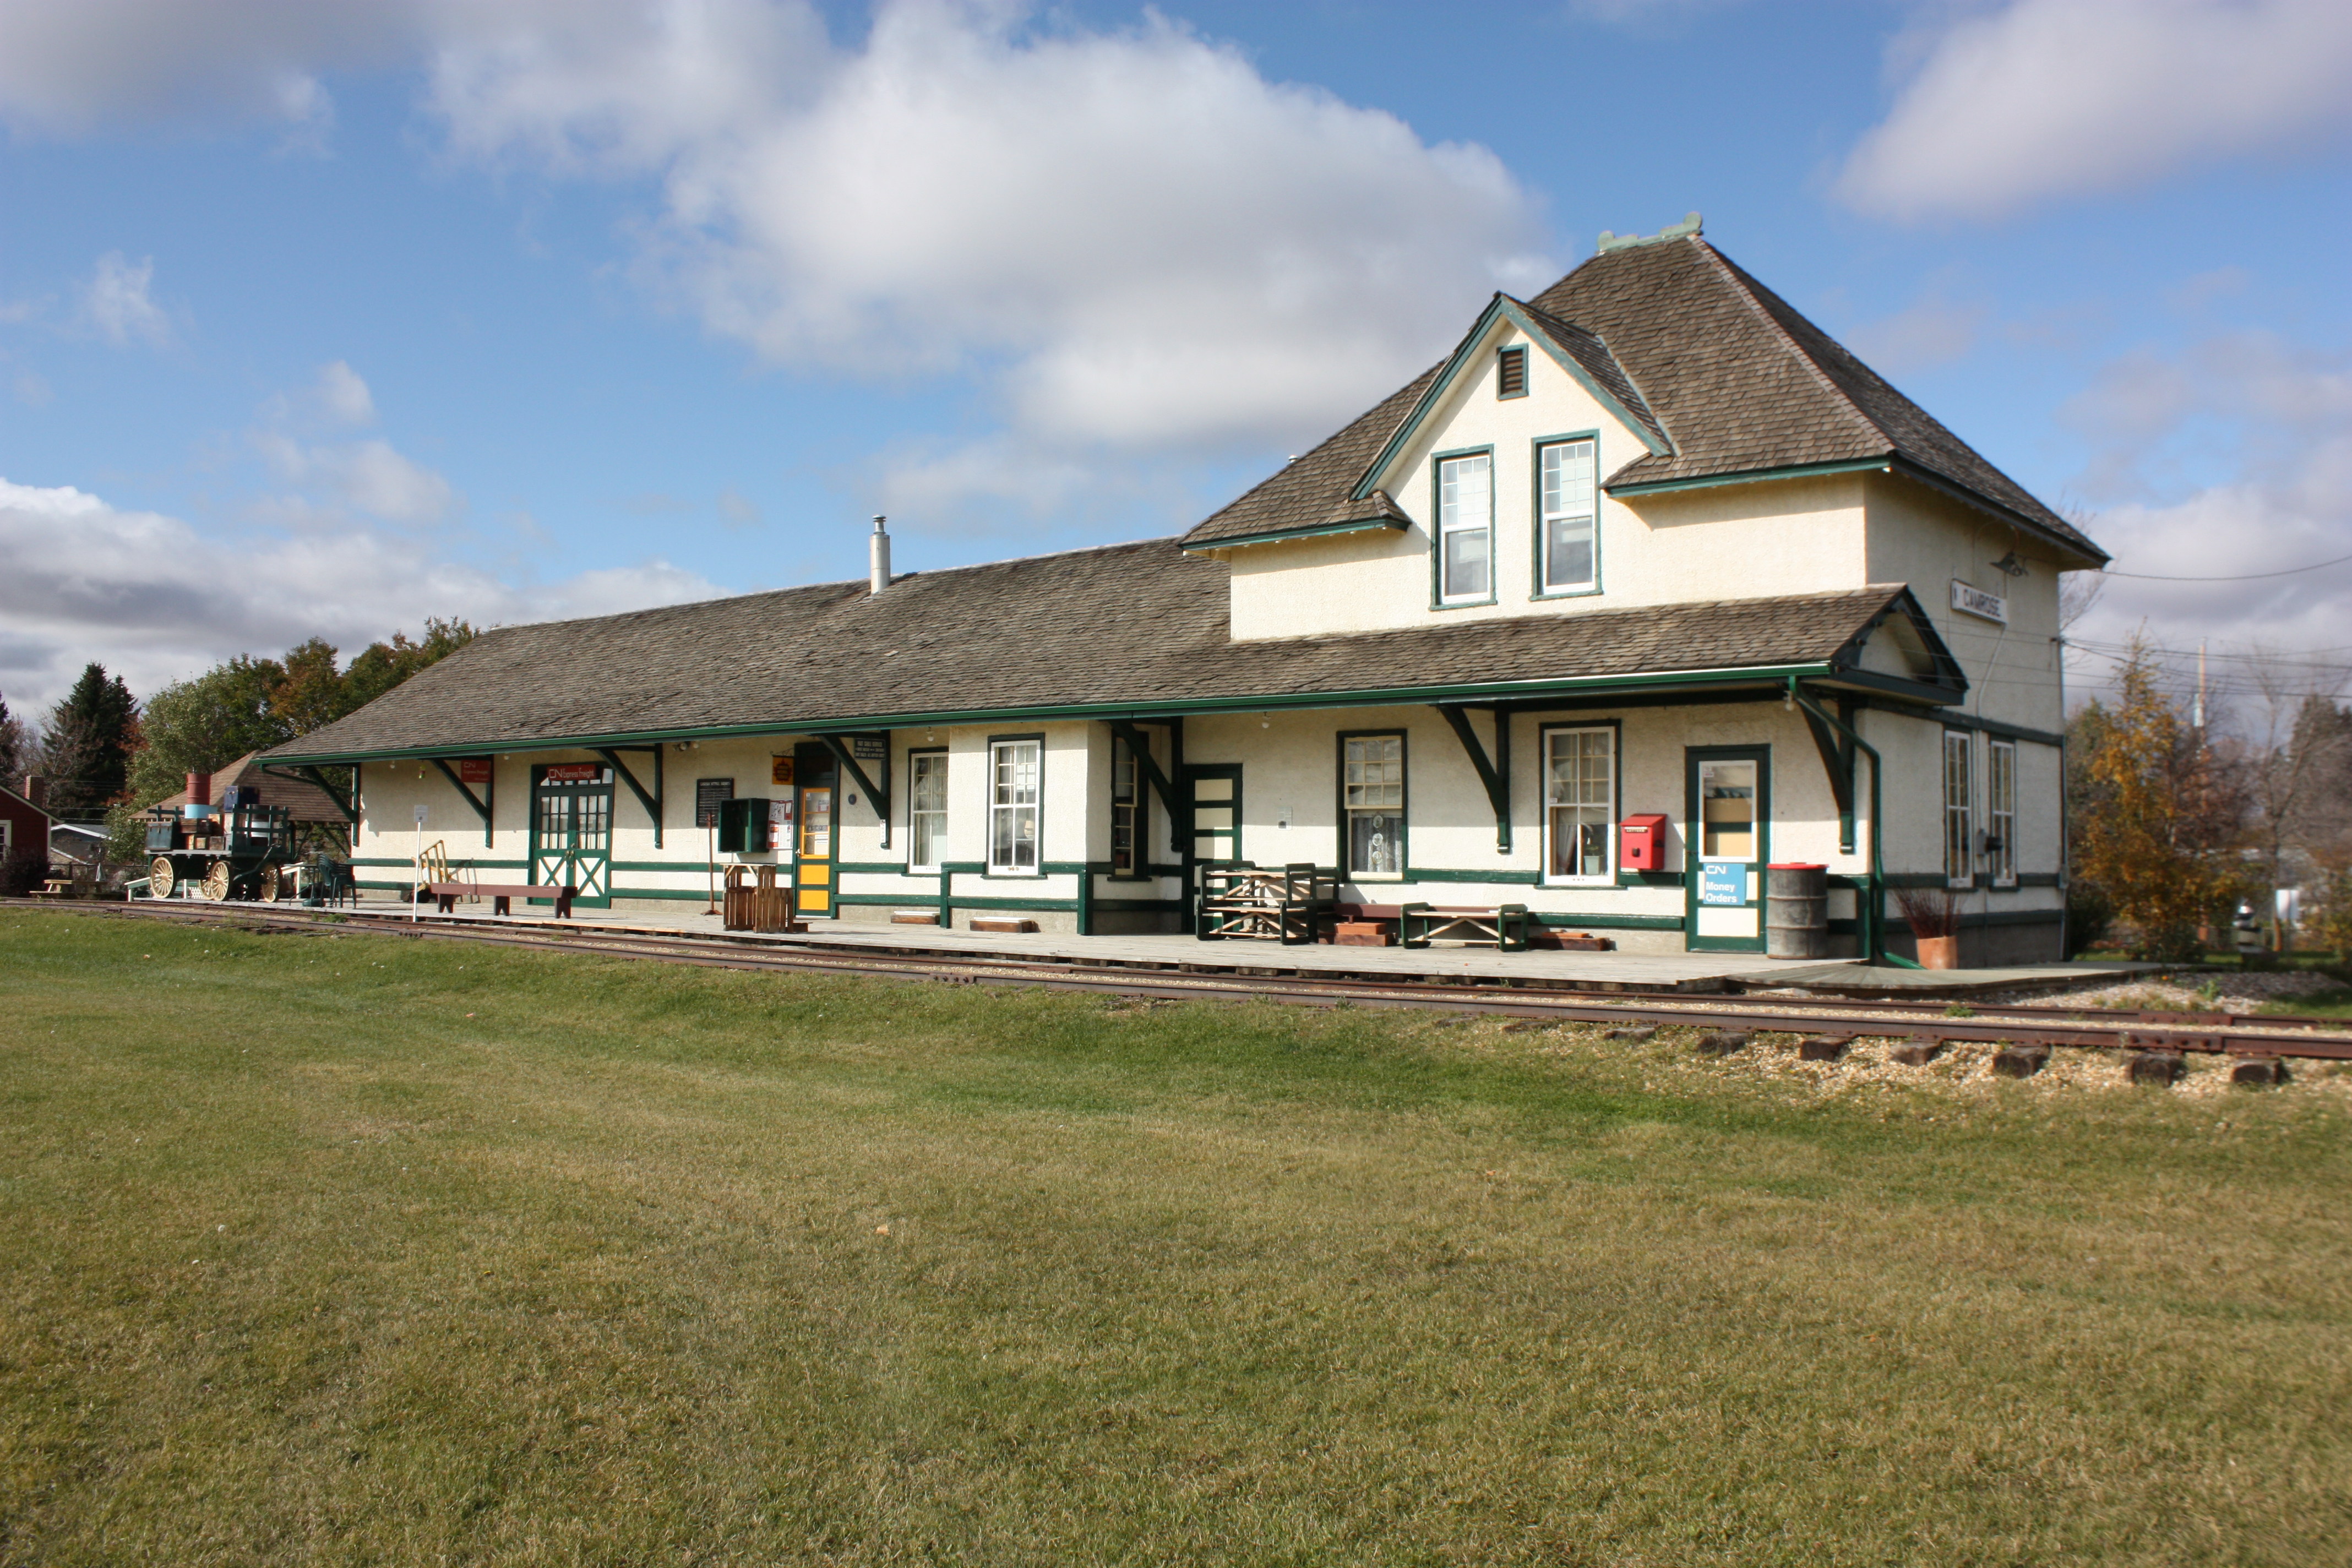 Canadian Northern Society/Camrose Heritage Railway Station & Park